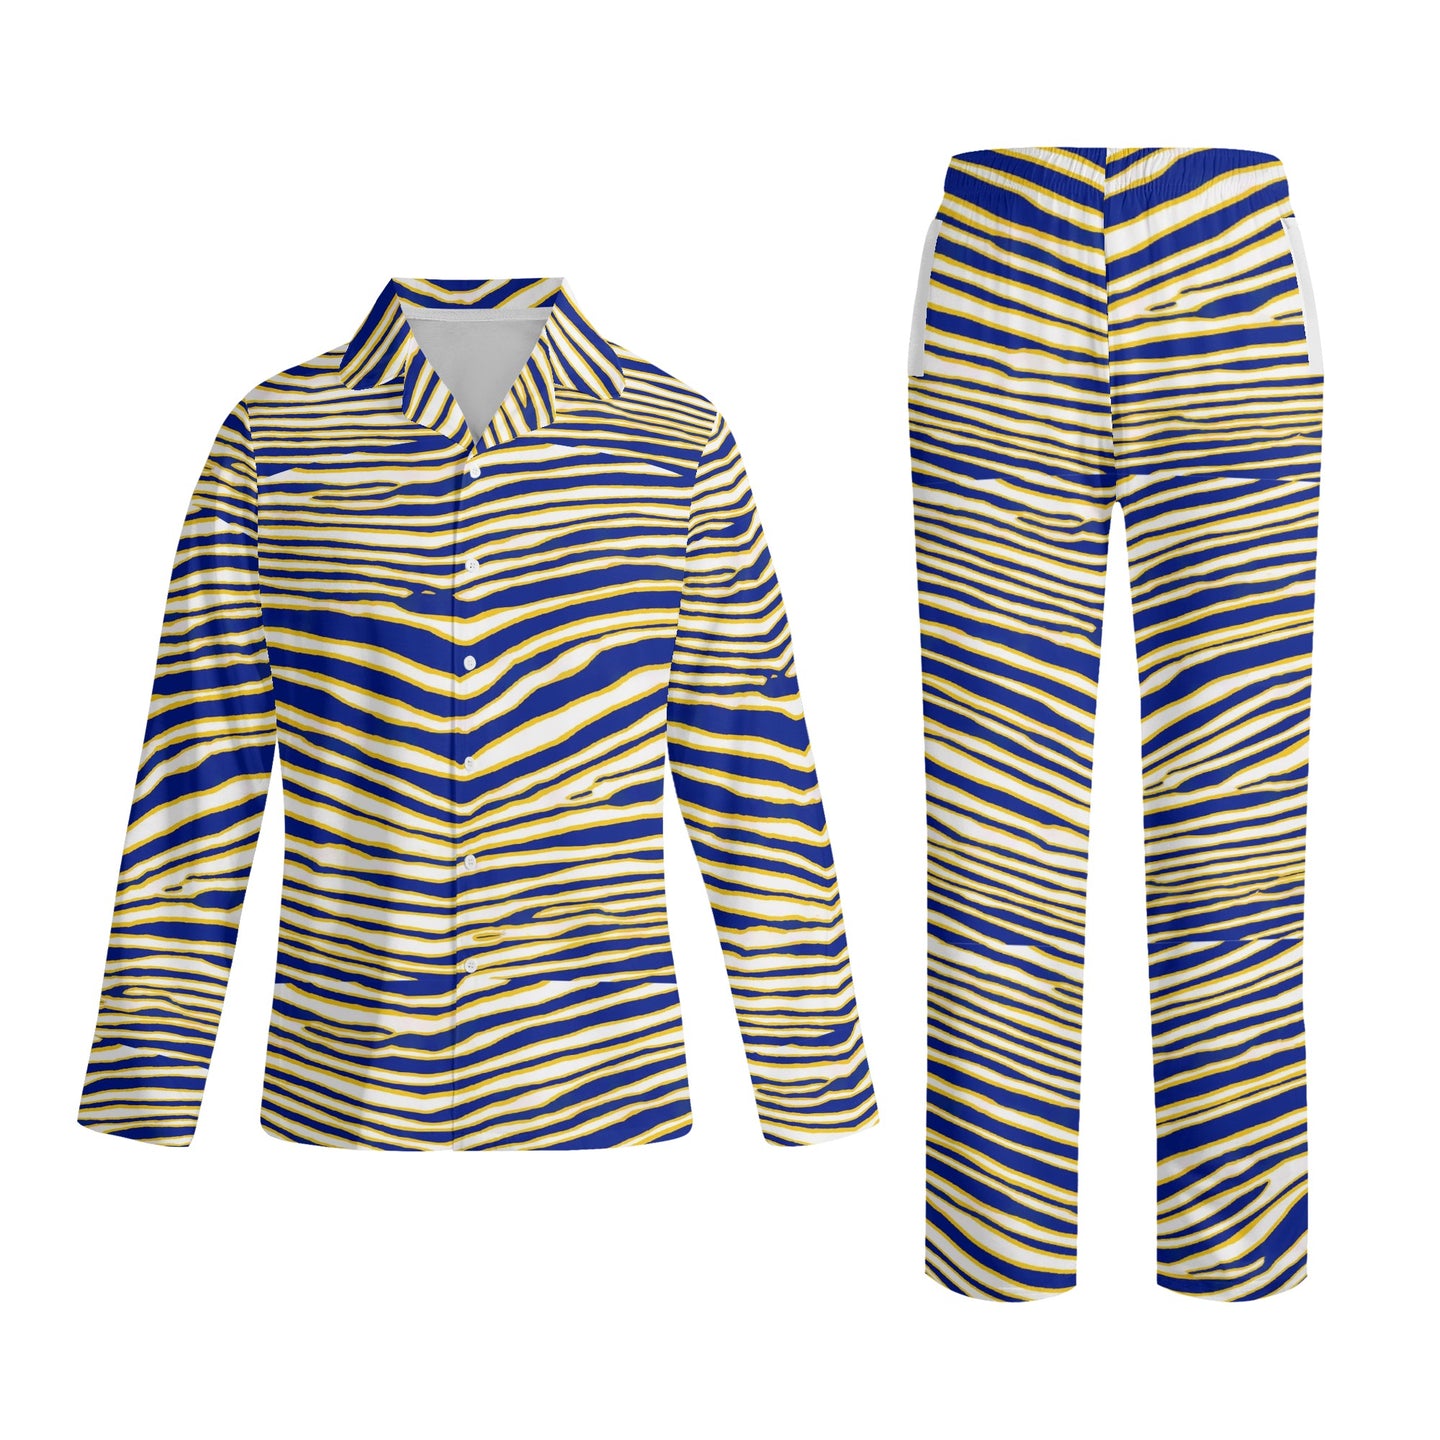 Sabres Zubaz Long-Sleeve Pajama Set